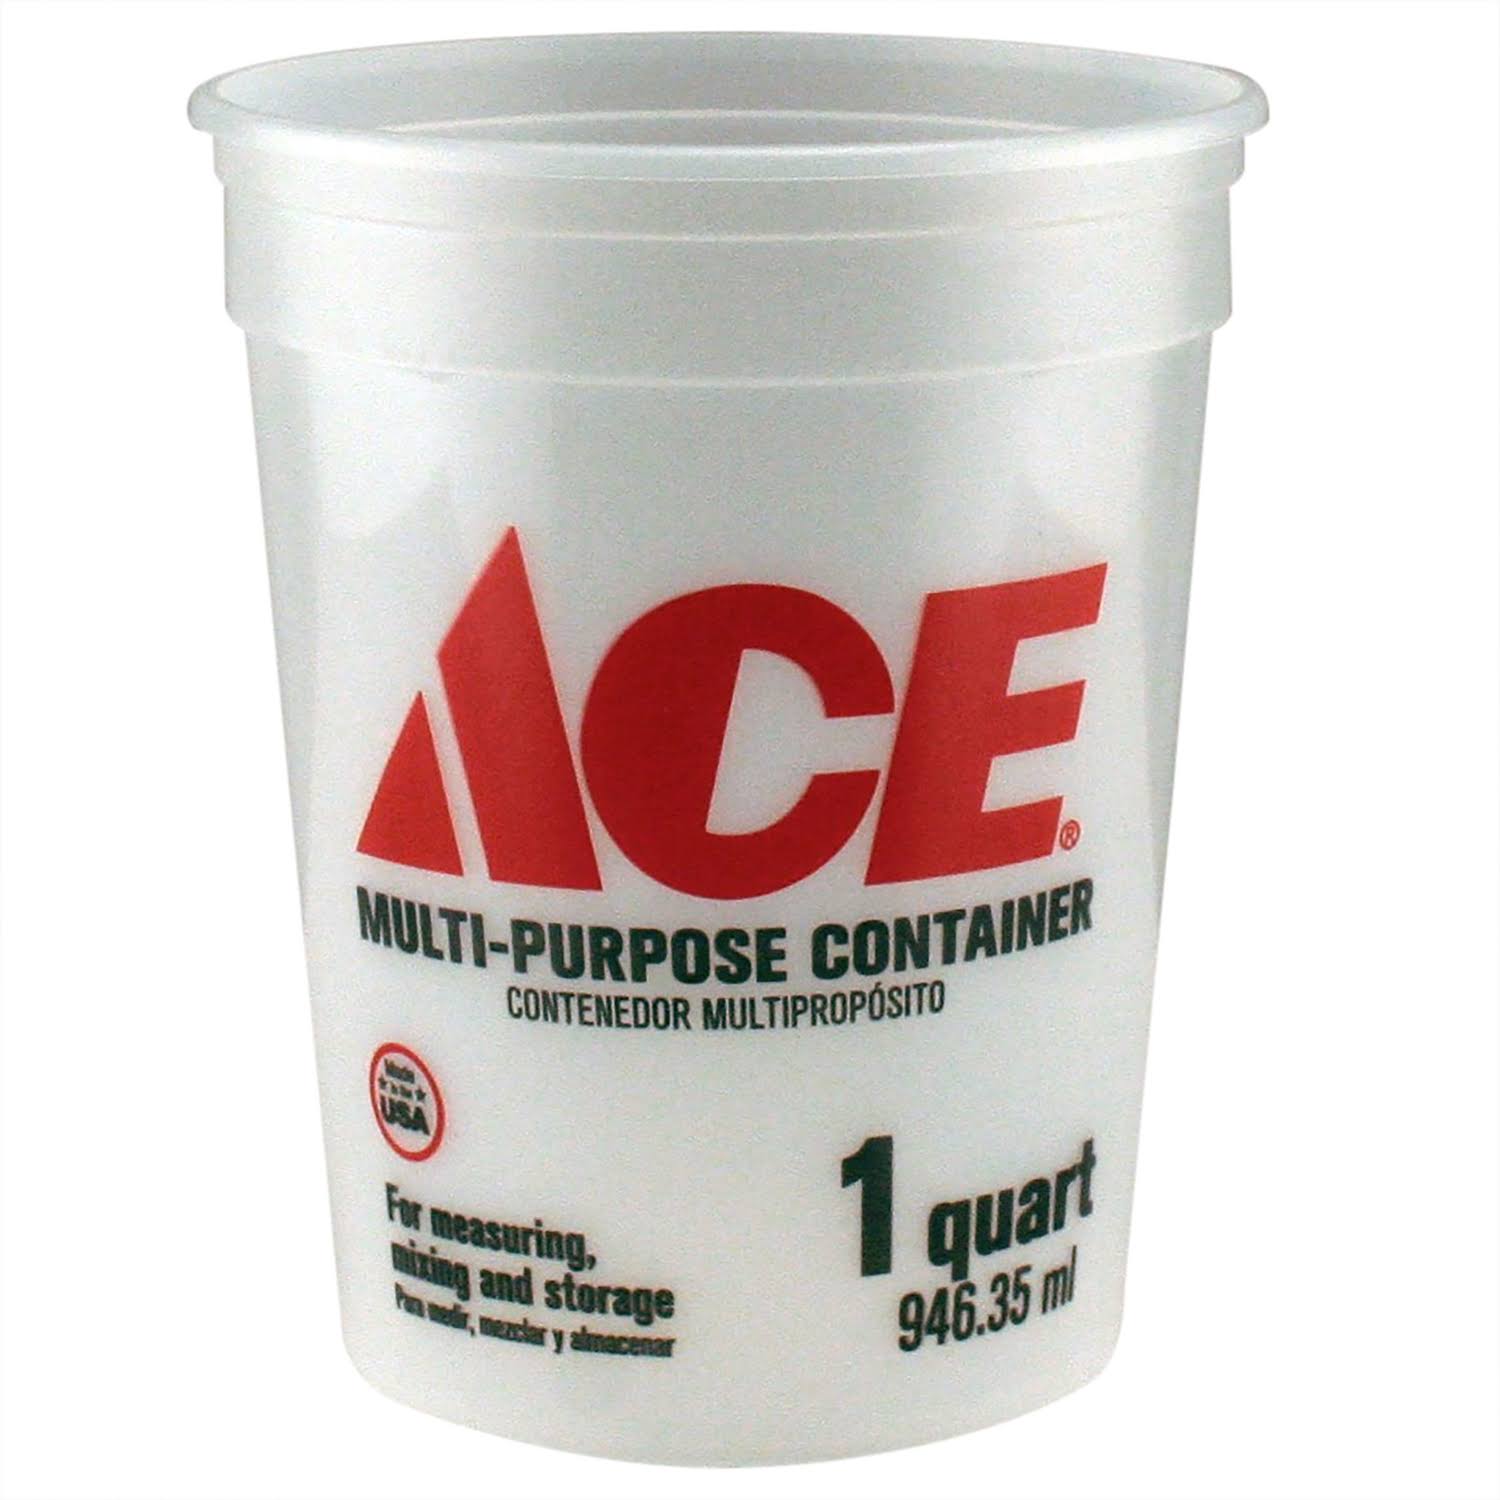 Ace Multi Purpose Calibrated Plastic Container, White